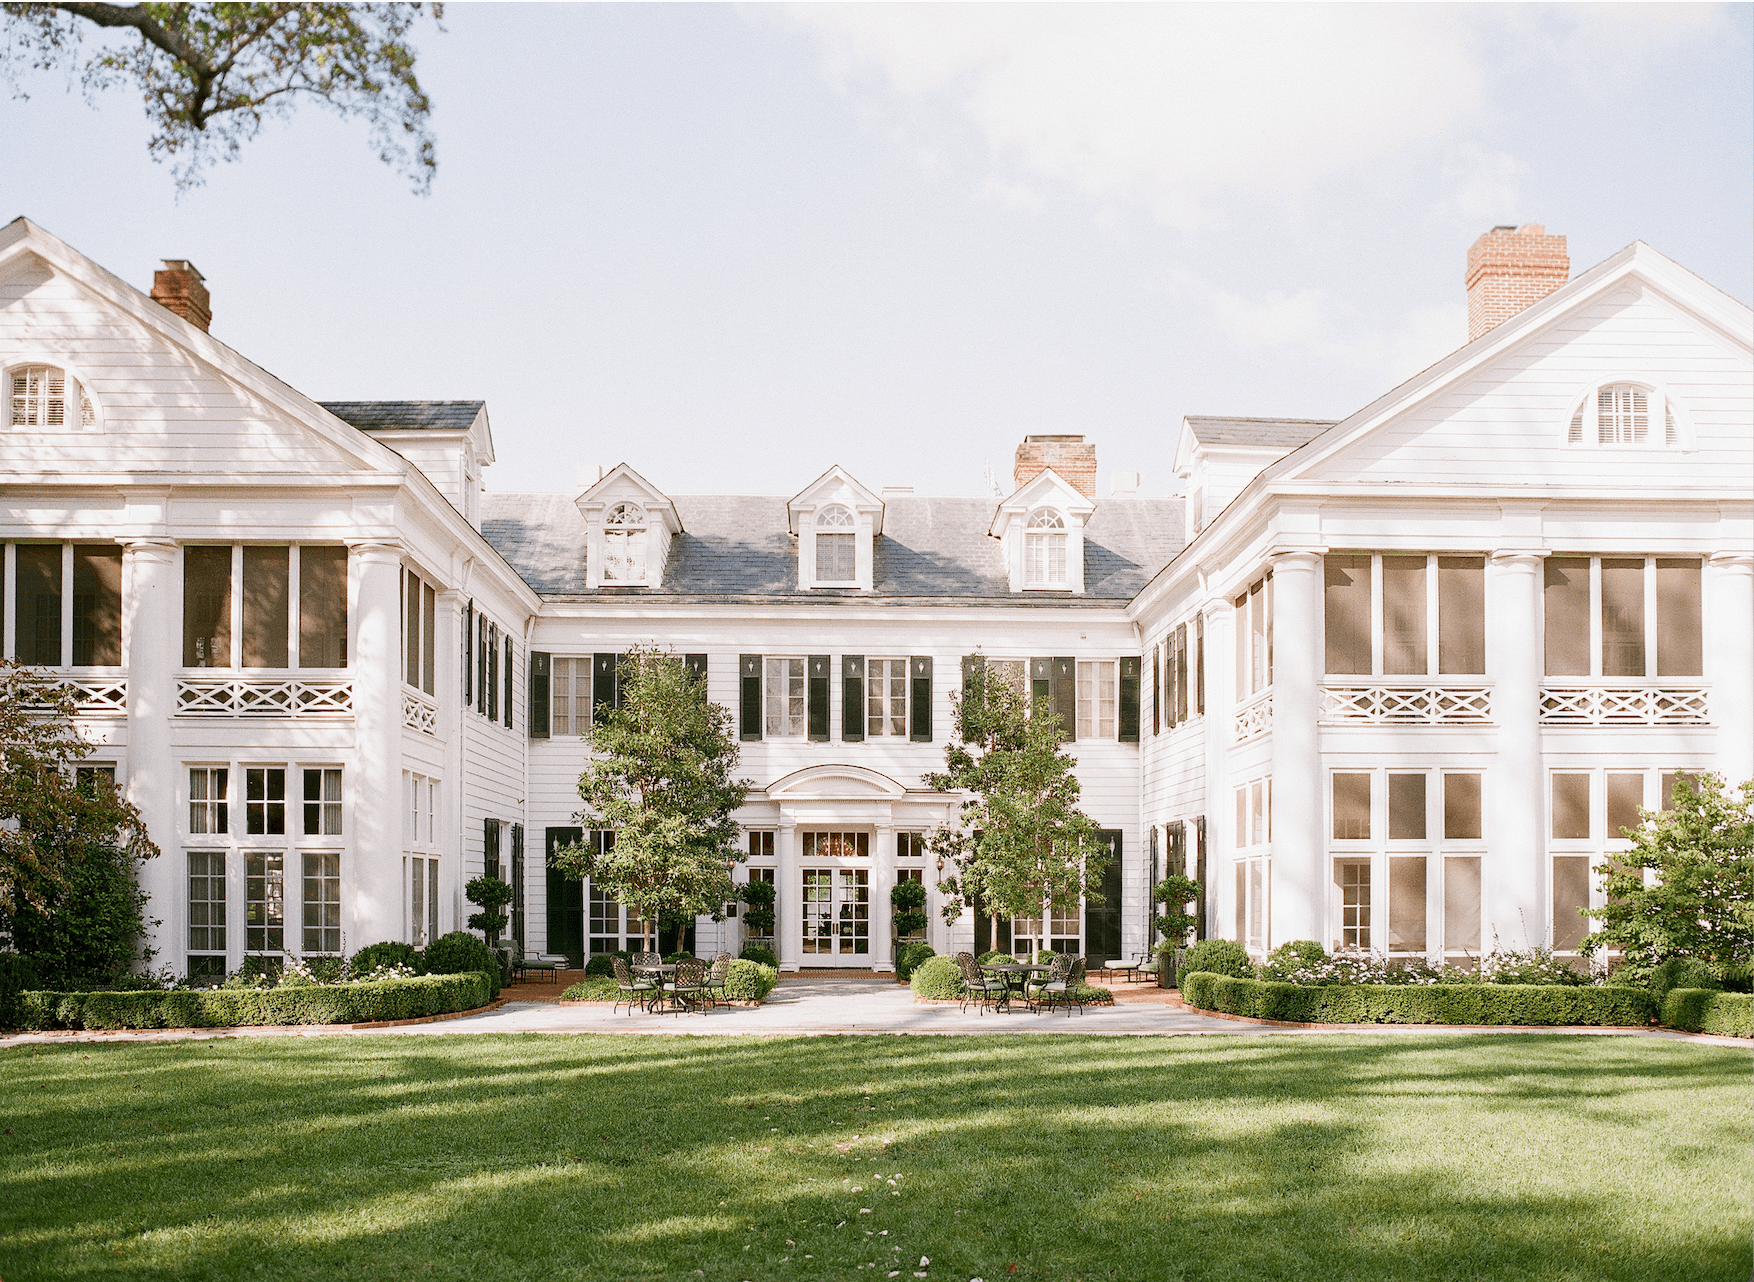 The Duke Mansion in Charlotte, North Carolina